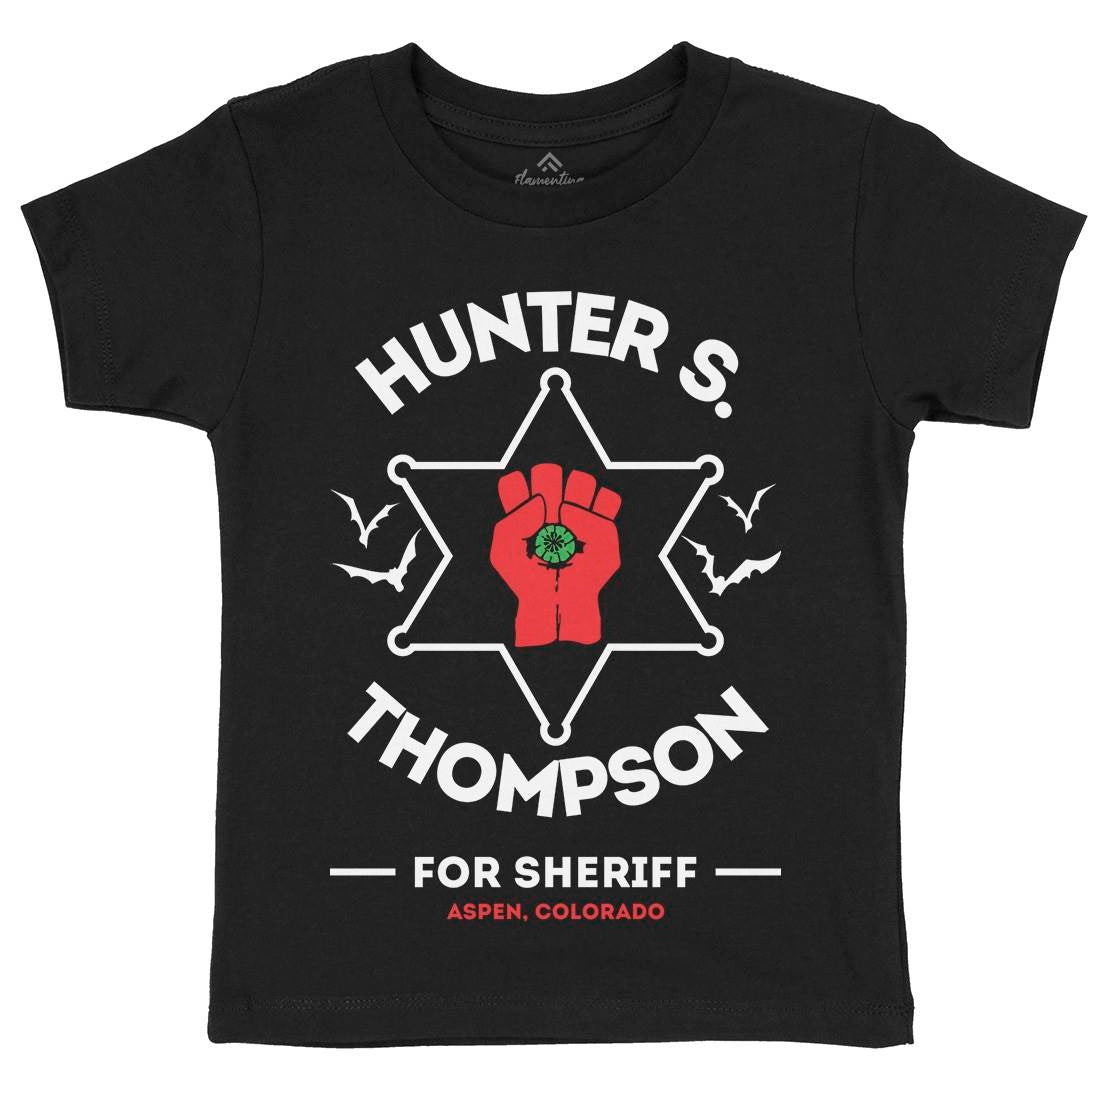 Hunter Thompson Kids Crew Neck T-Shirt Retro D336